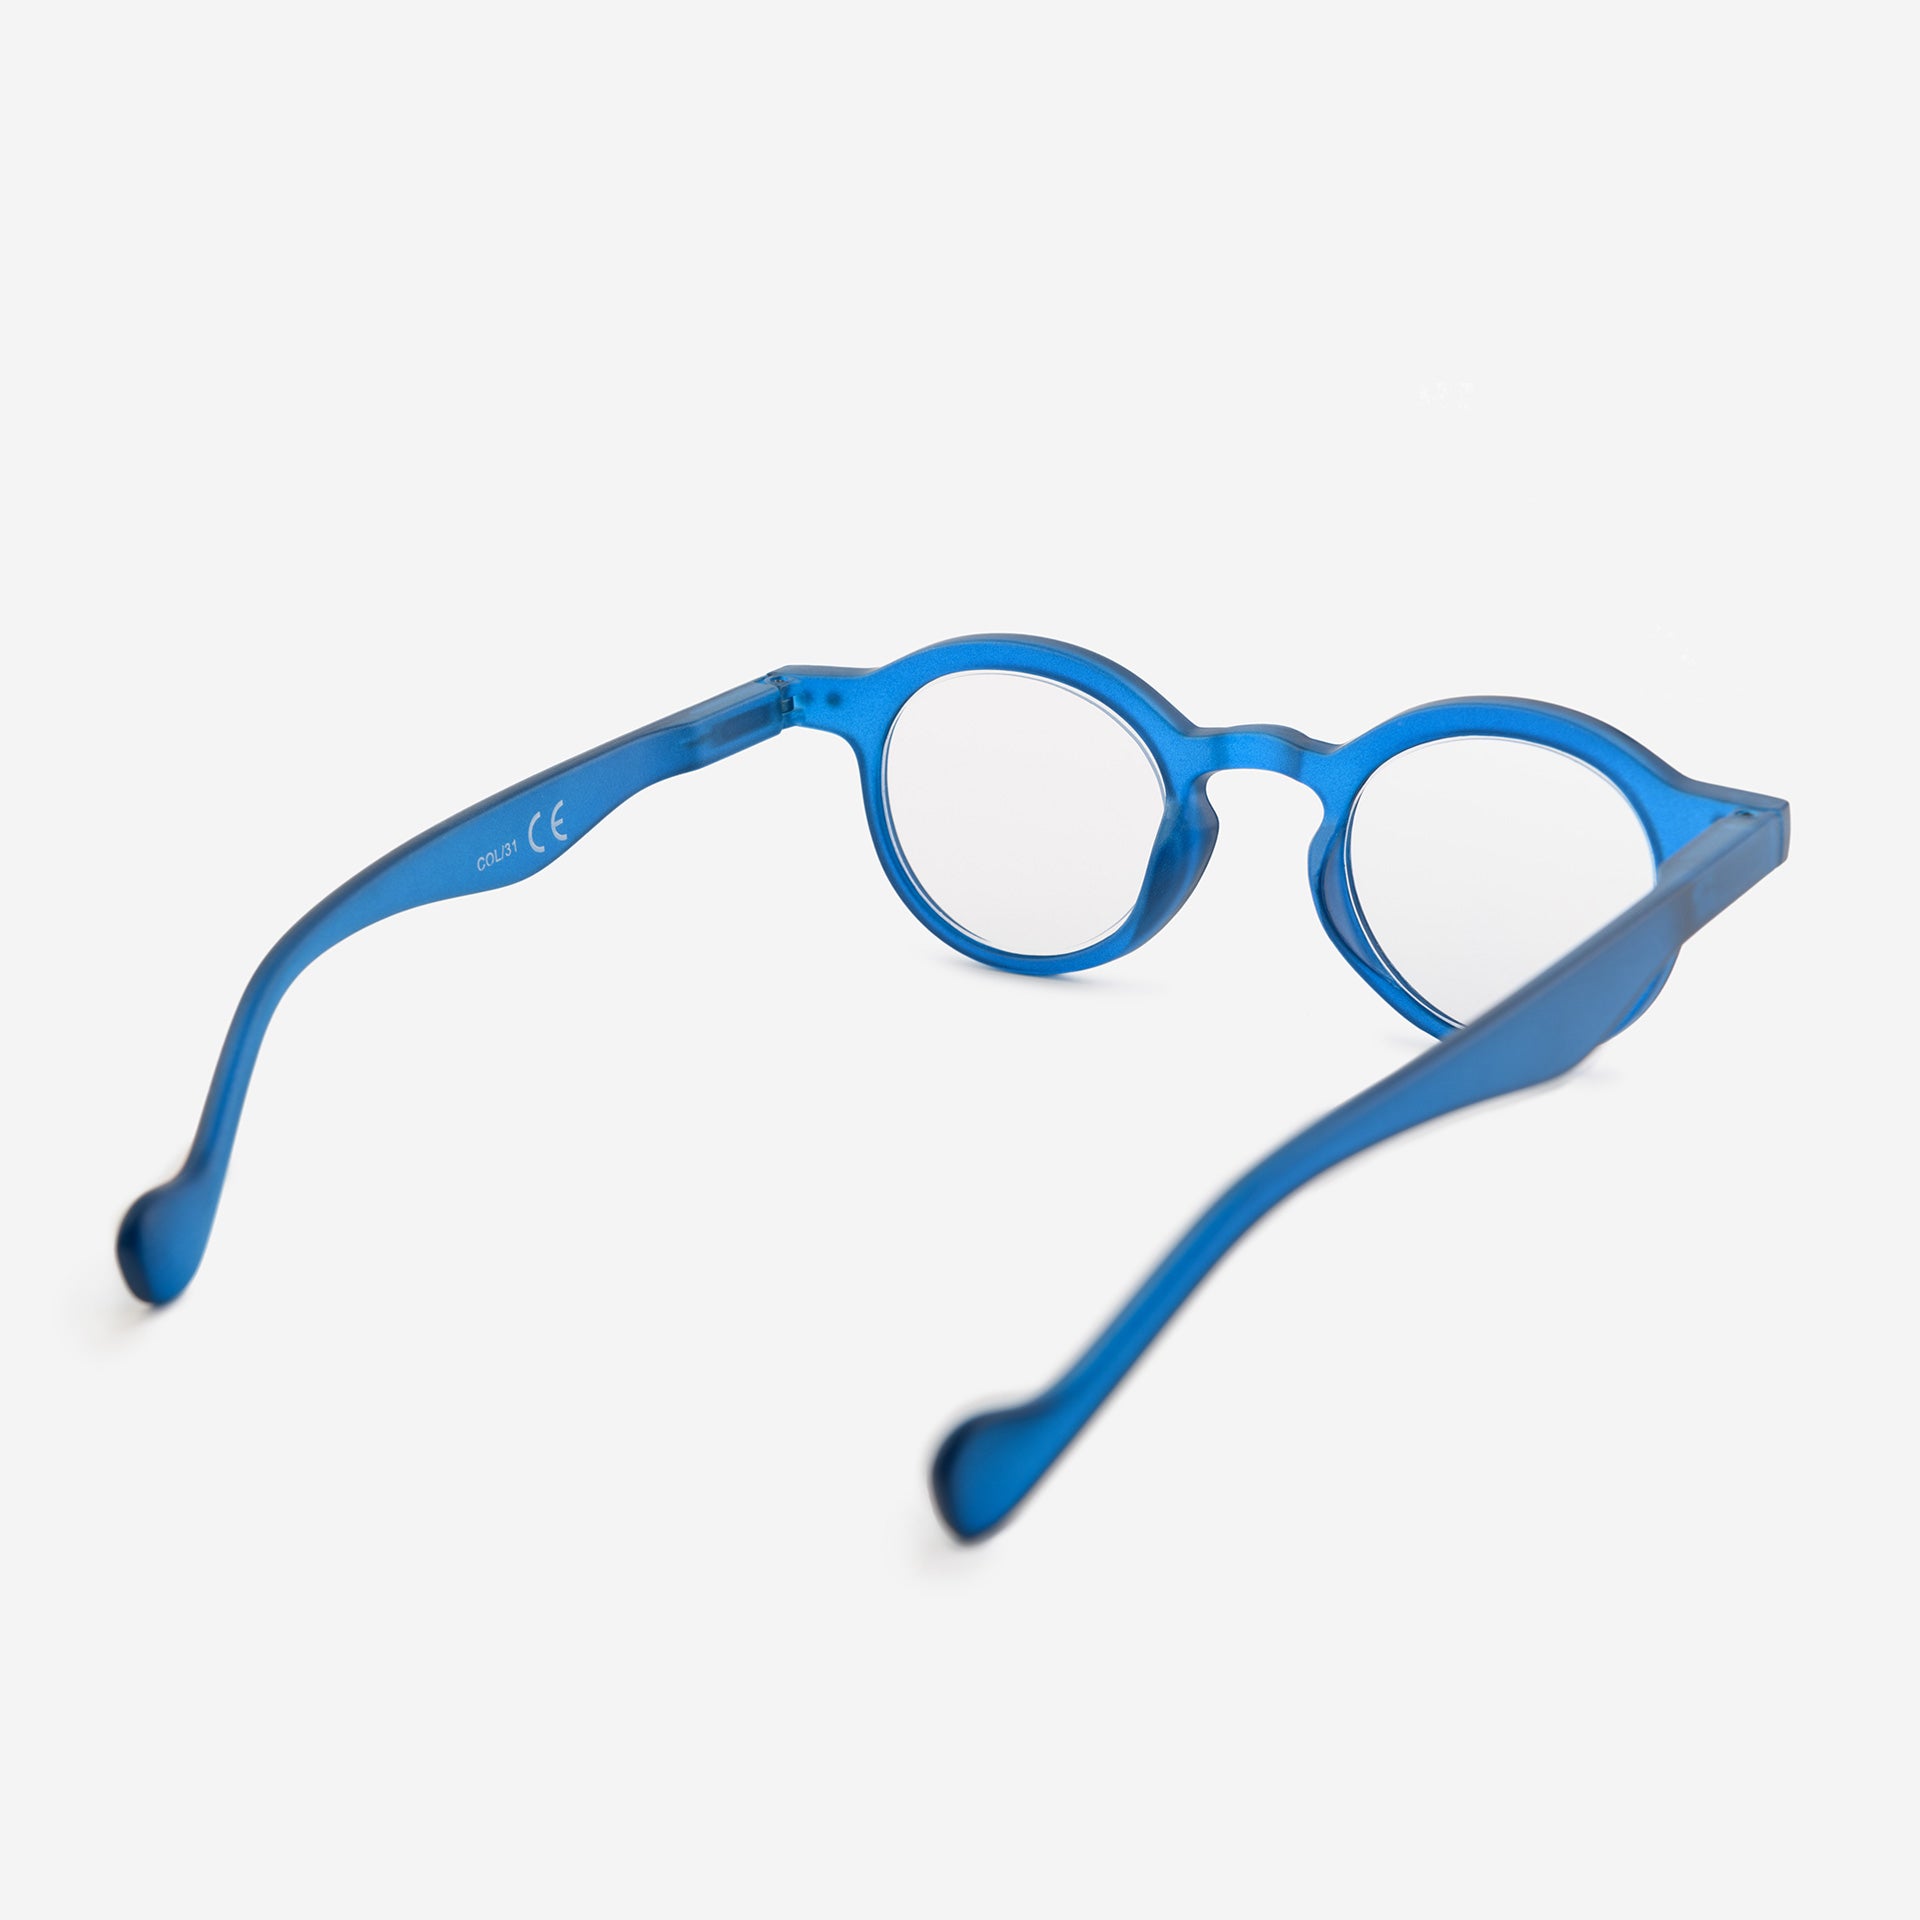 Blue round reading glasses